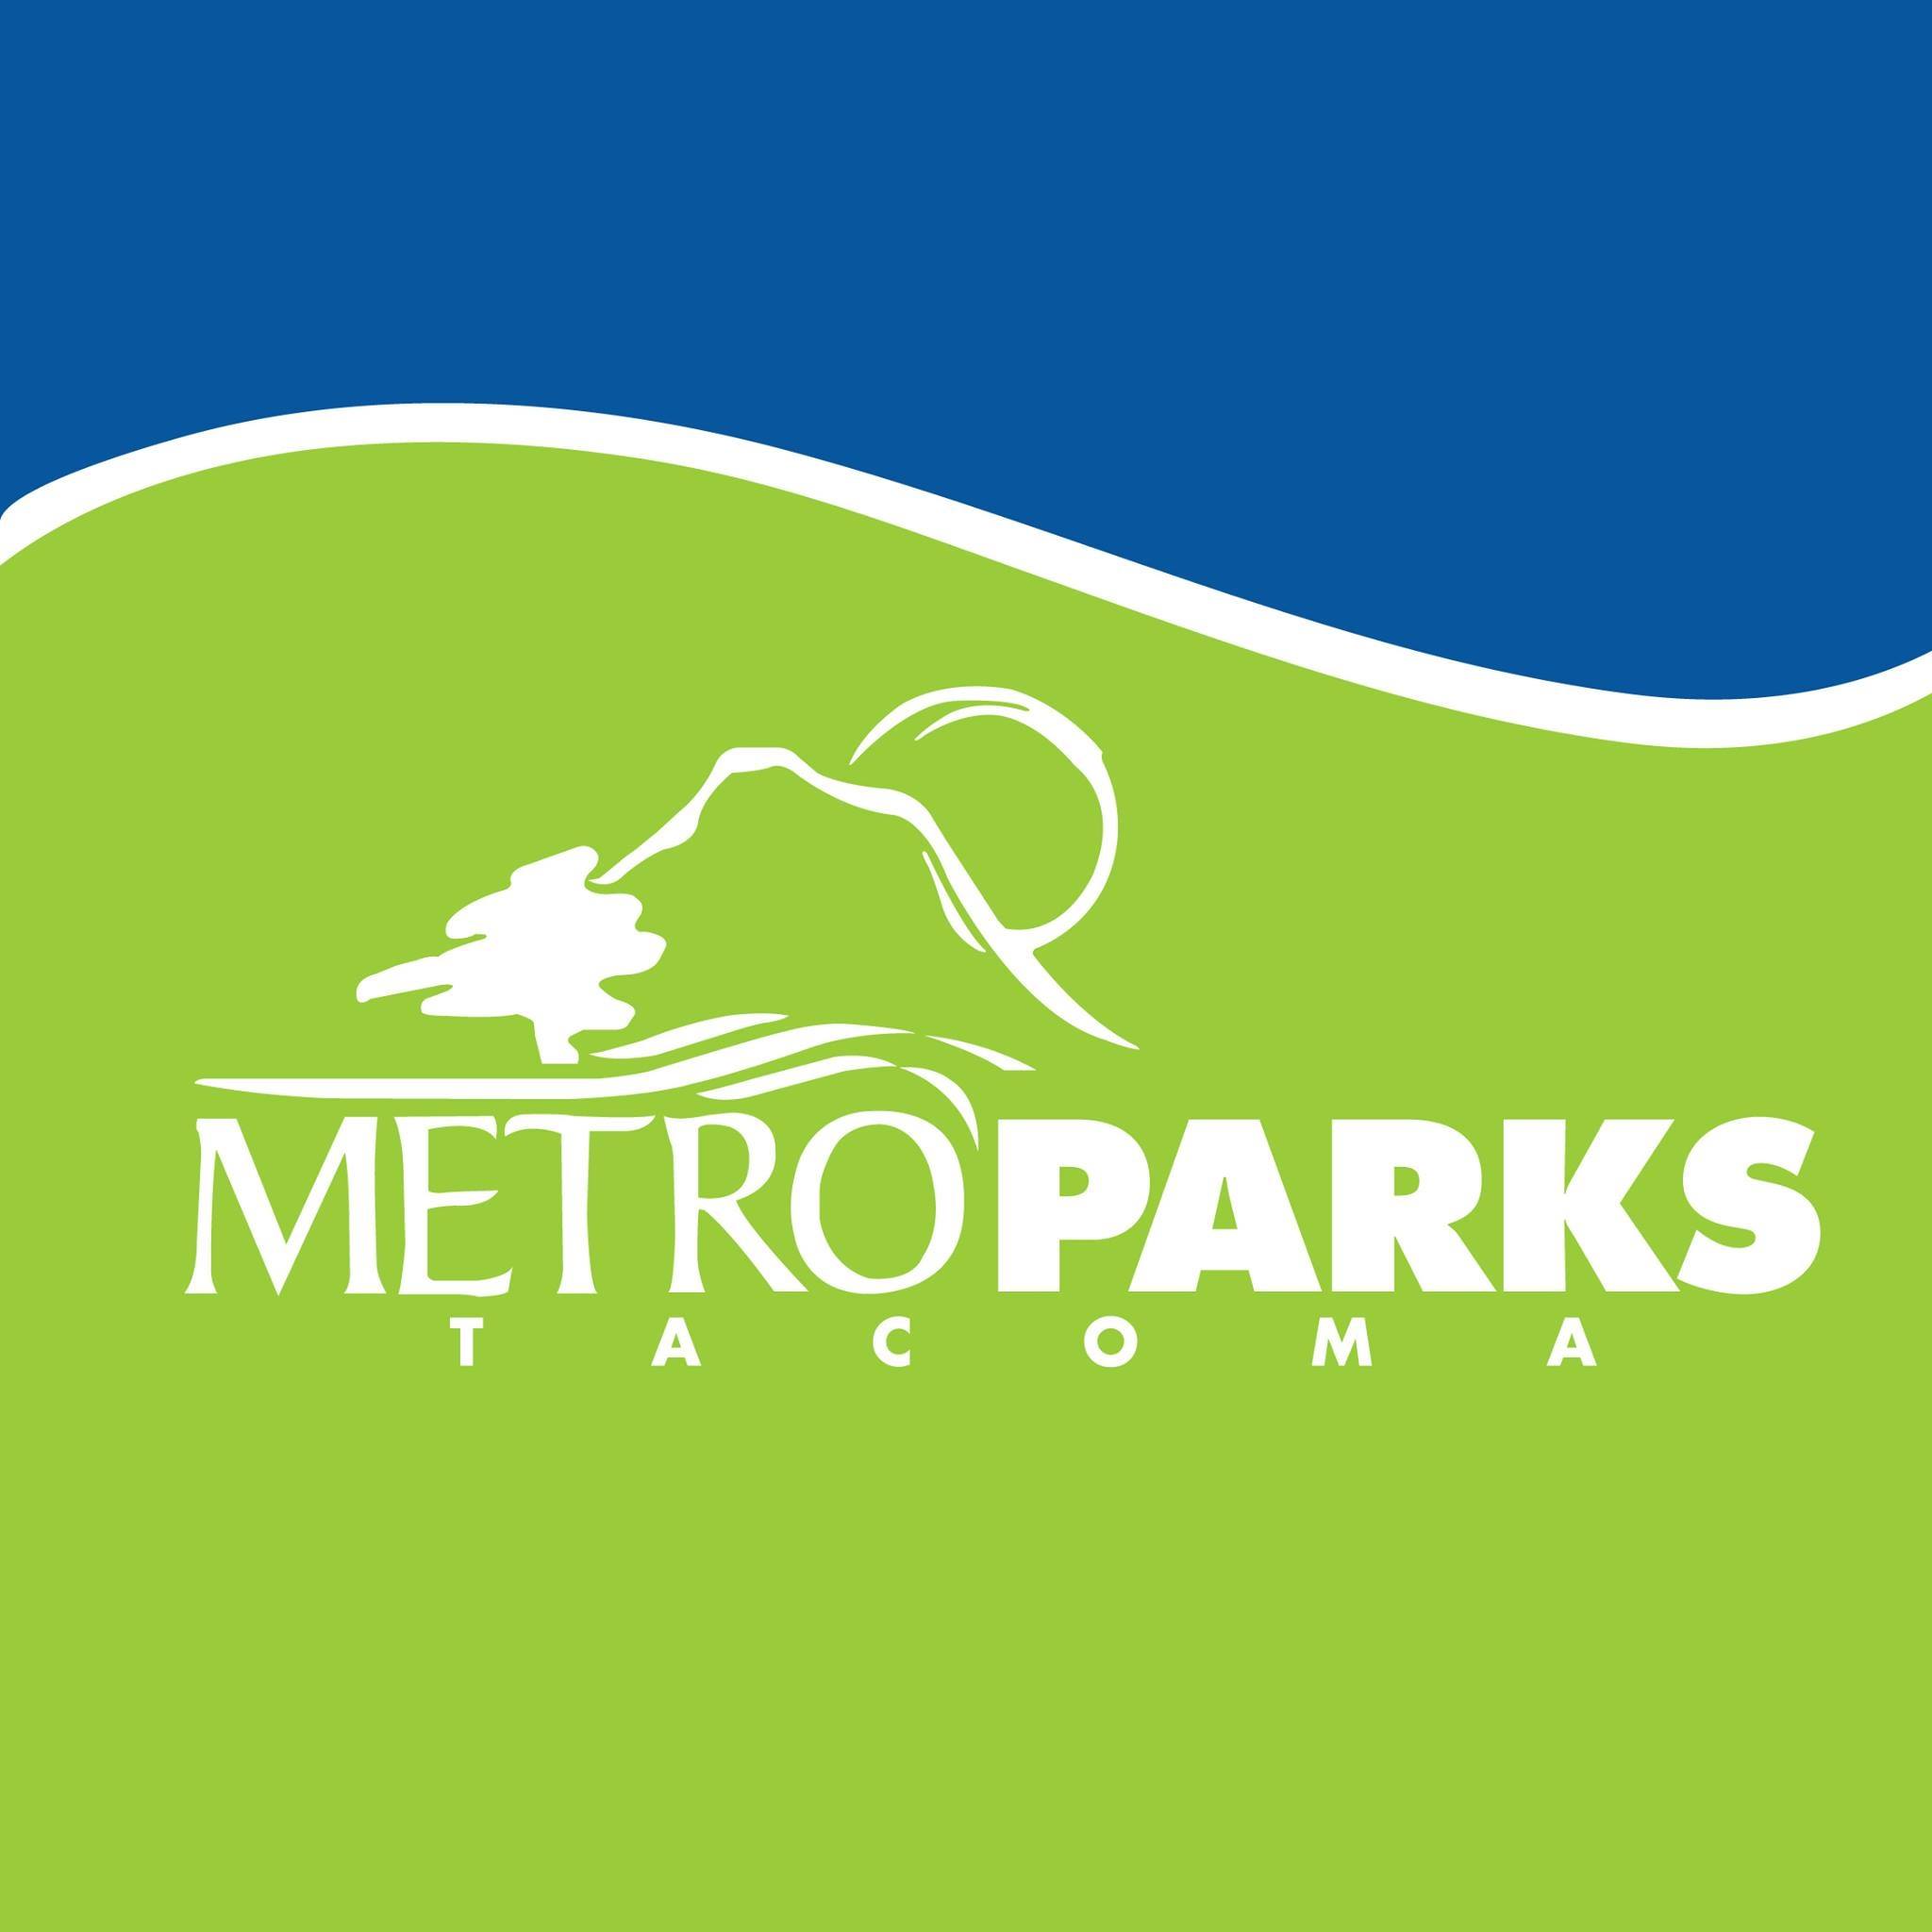 Metro Parks Tacoma - Ruston's park department